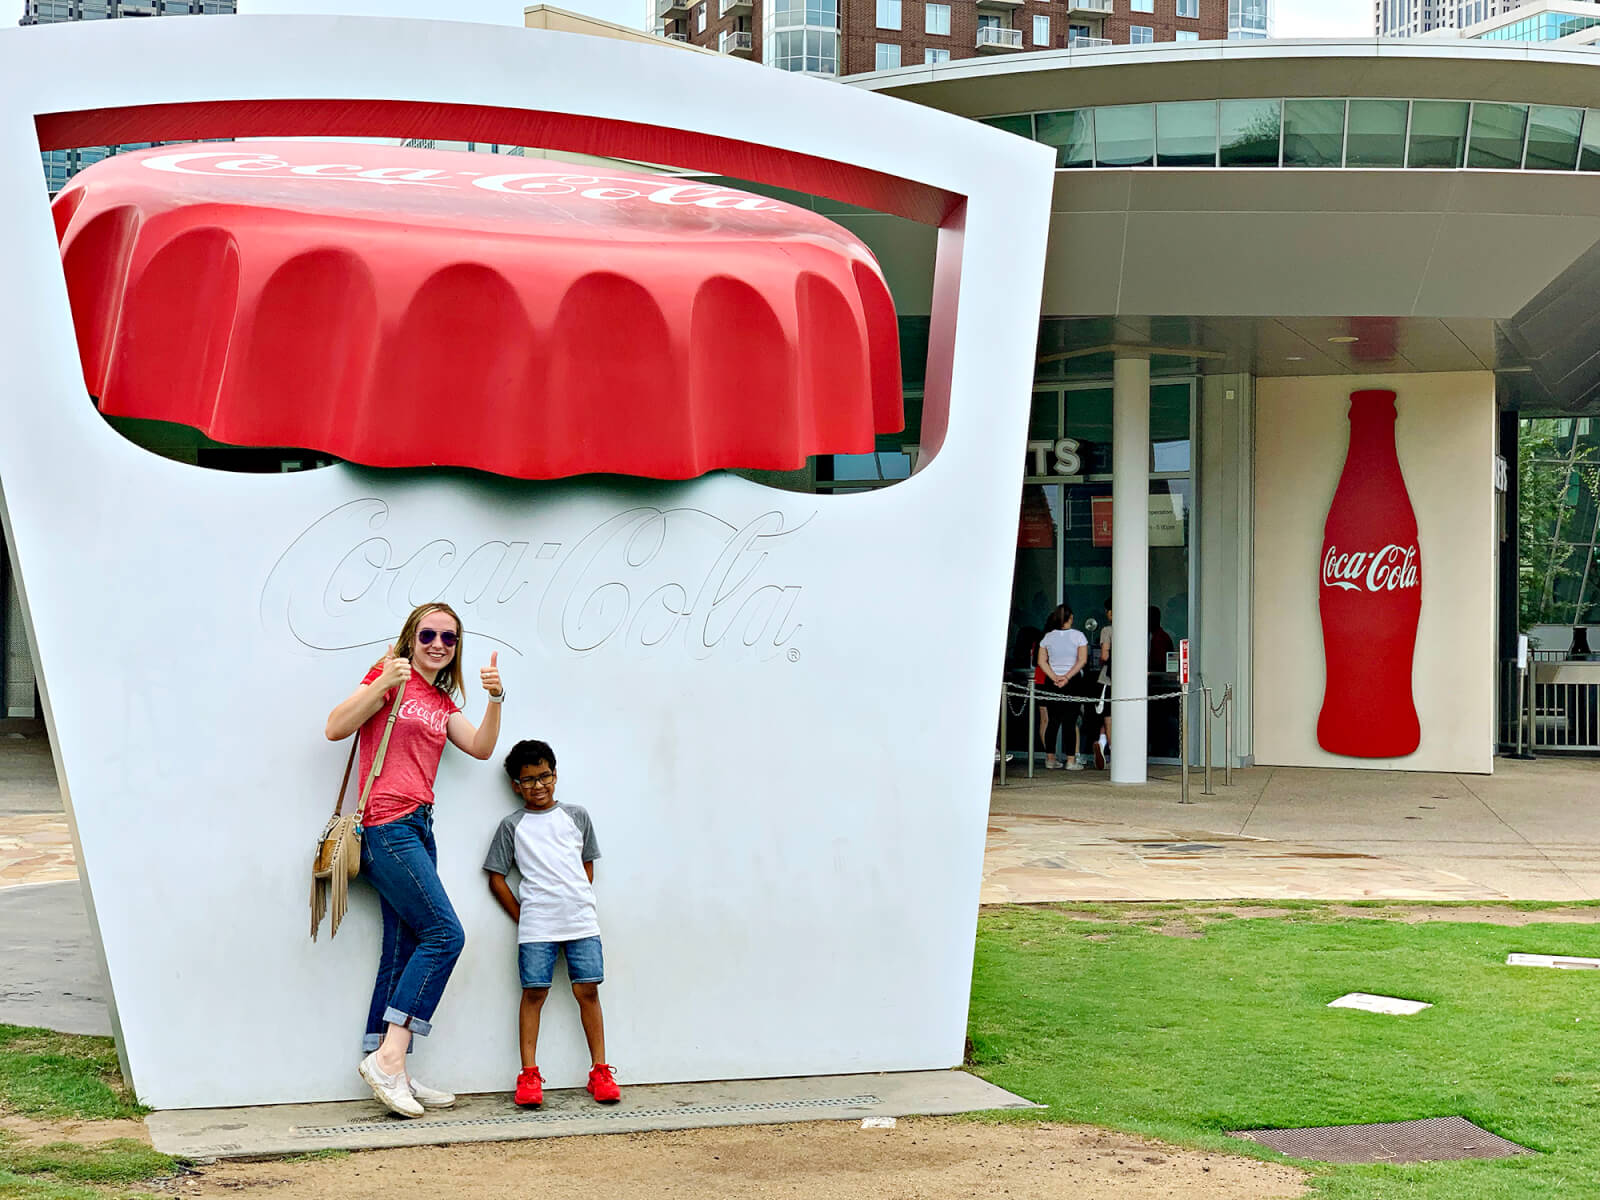 Have fun at World of Coca-Cola in Atlanta, Georgia